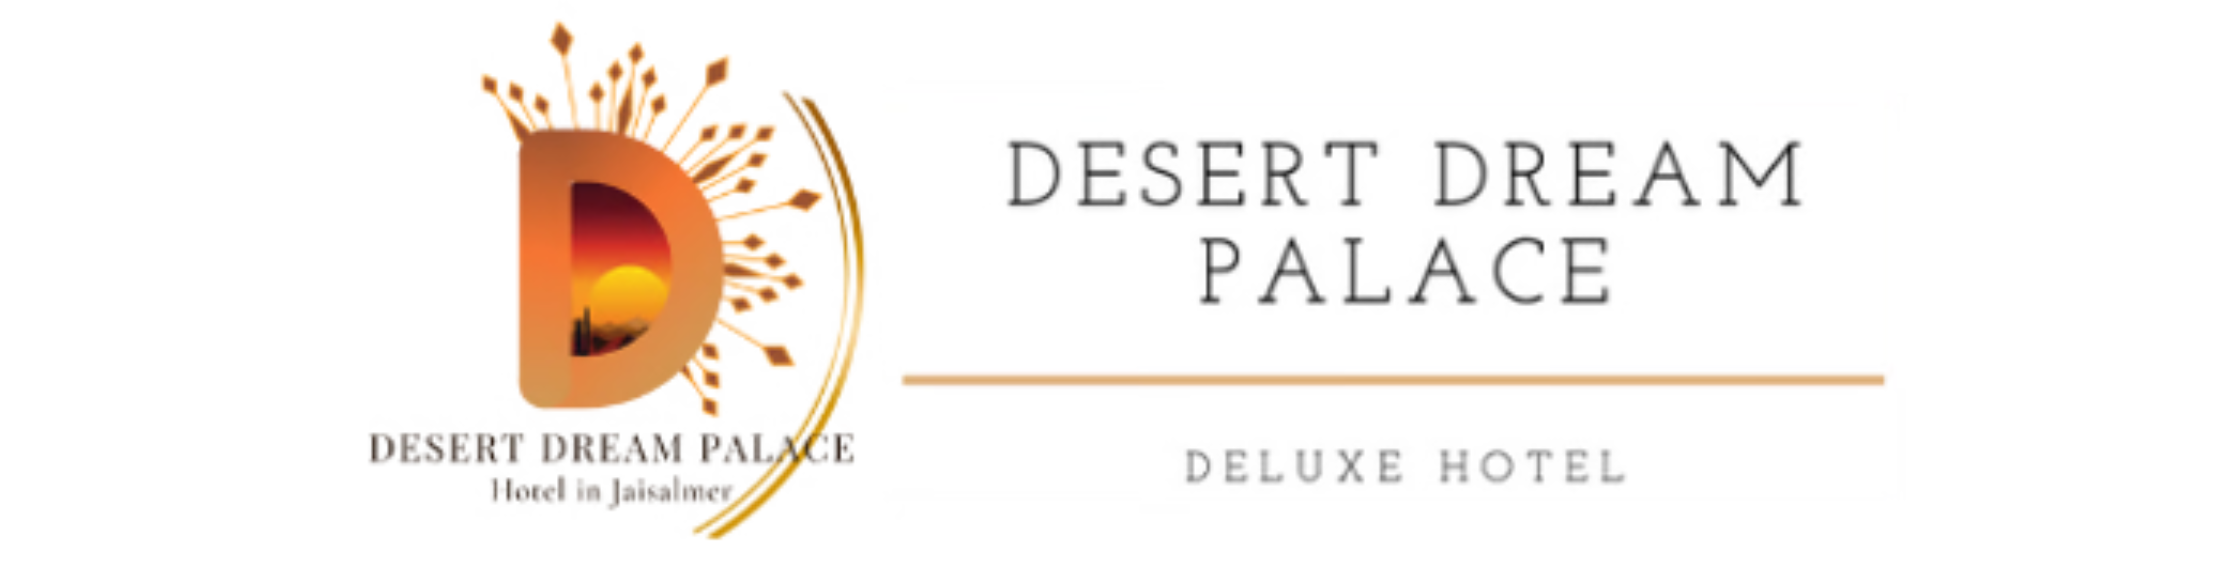 Desert Dream Palace